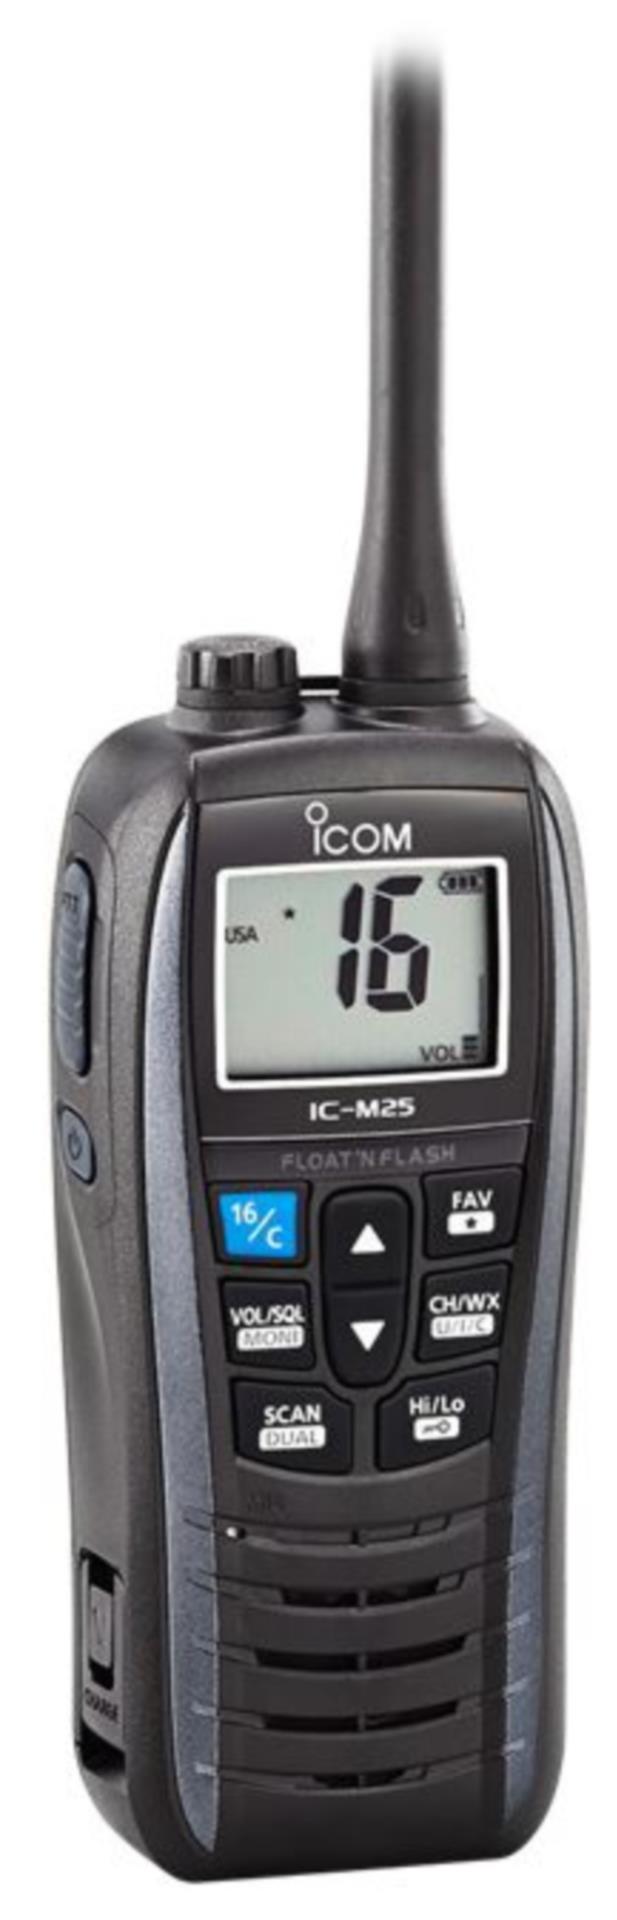 Icom IC-M25 UKW Handsprechfunkgerät